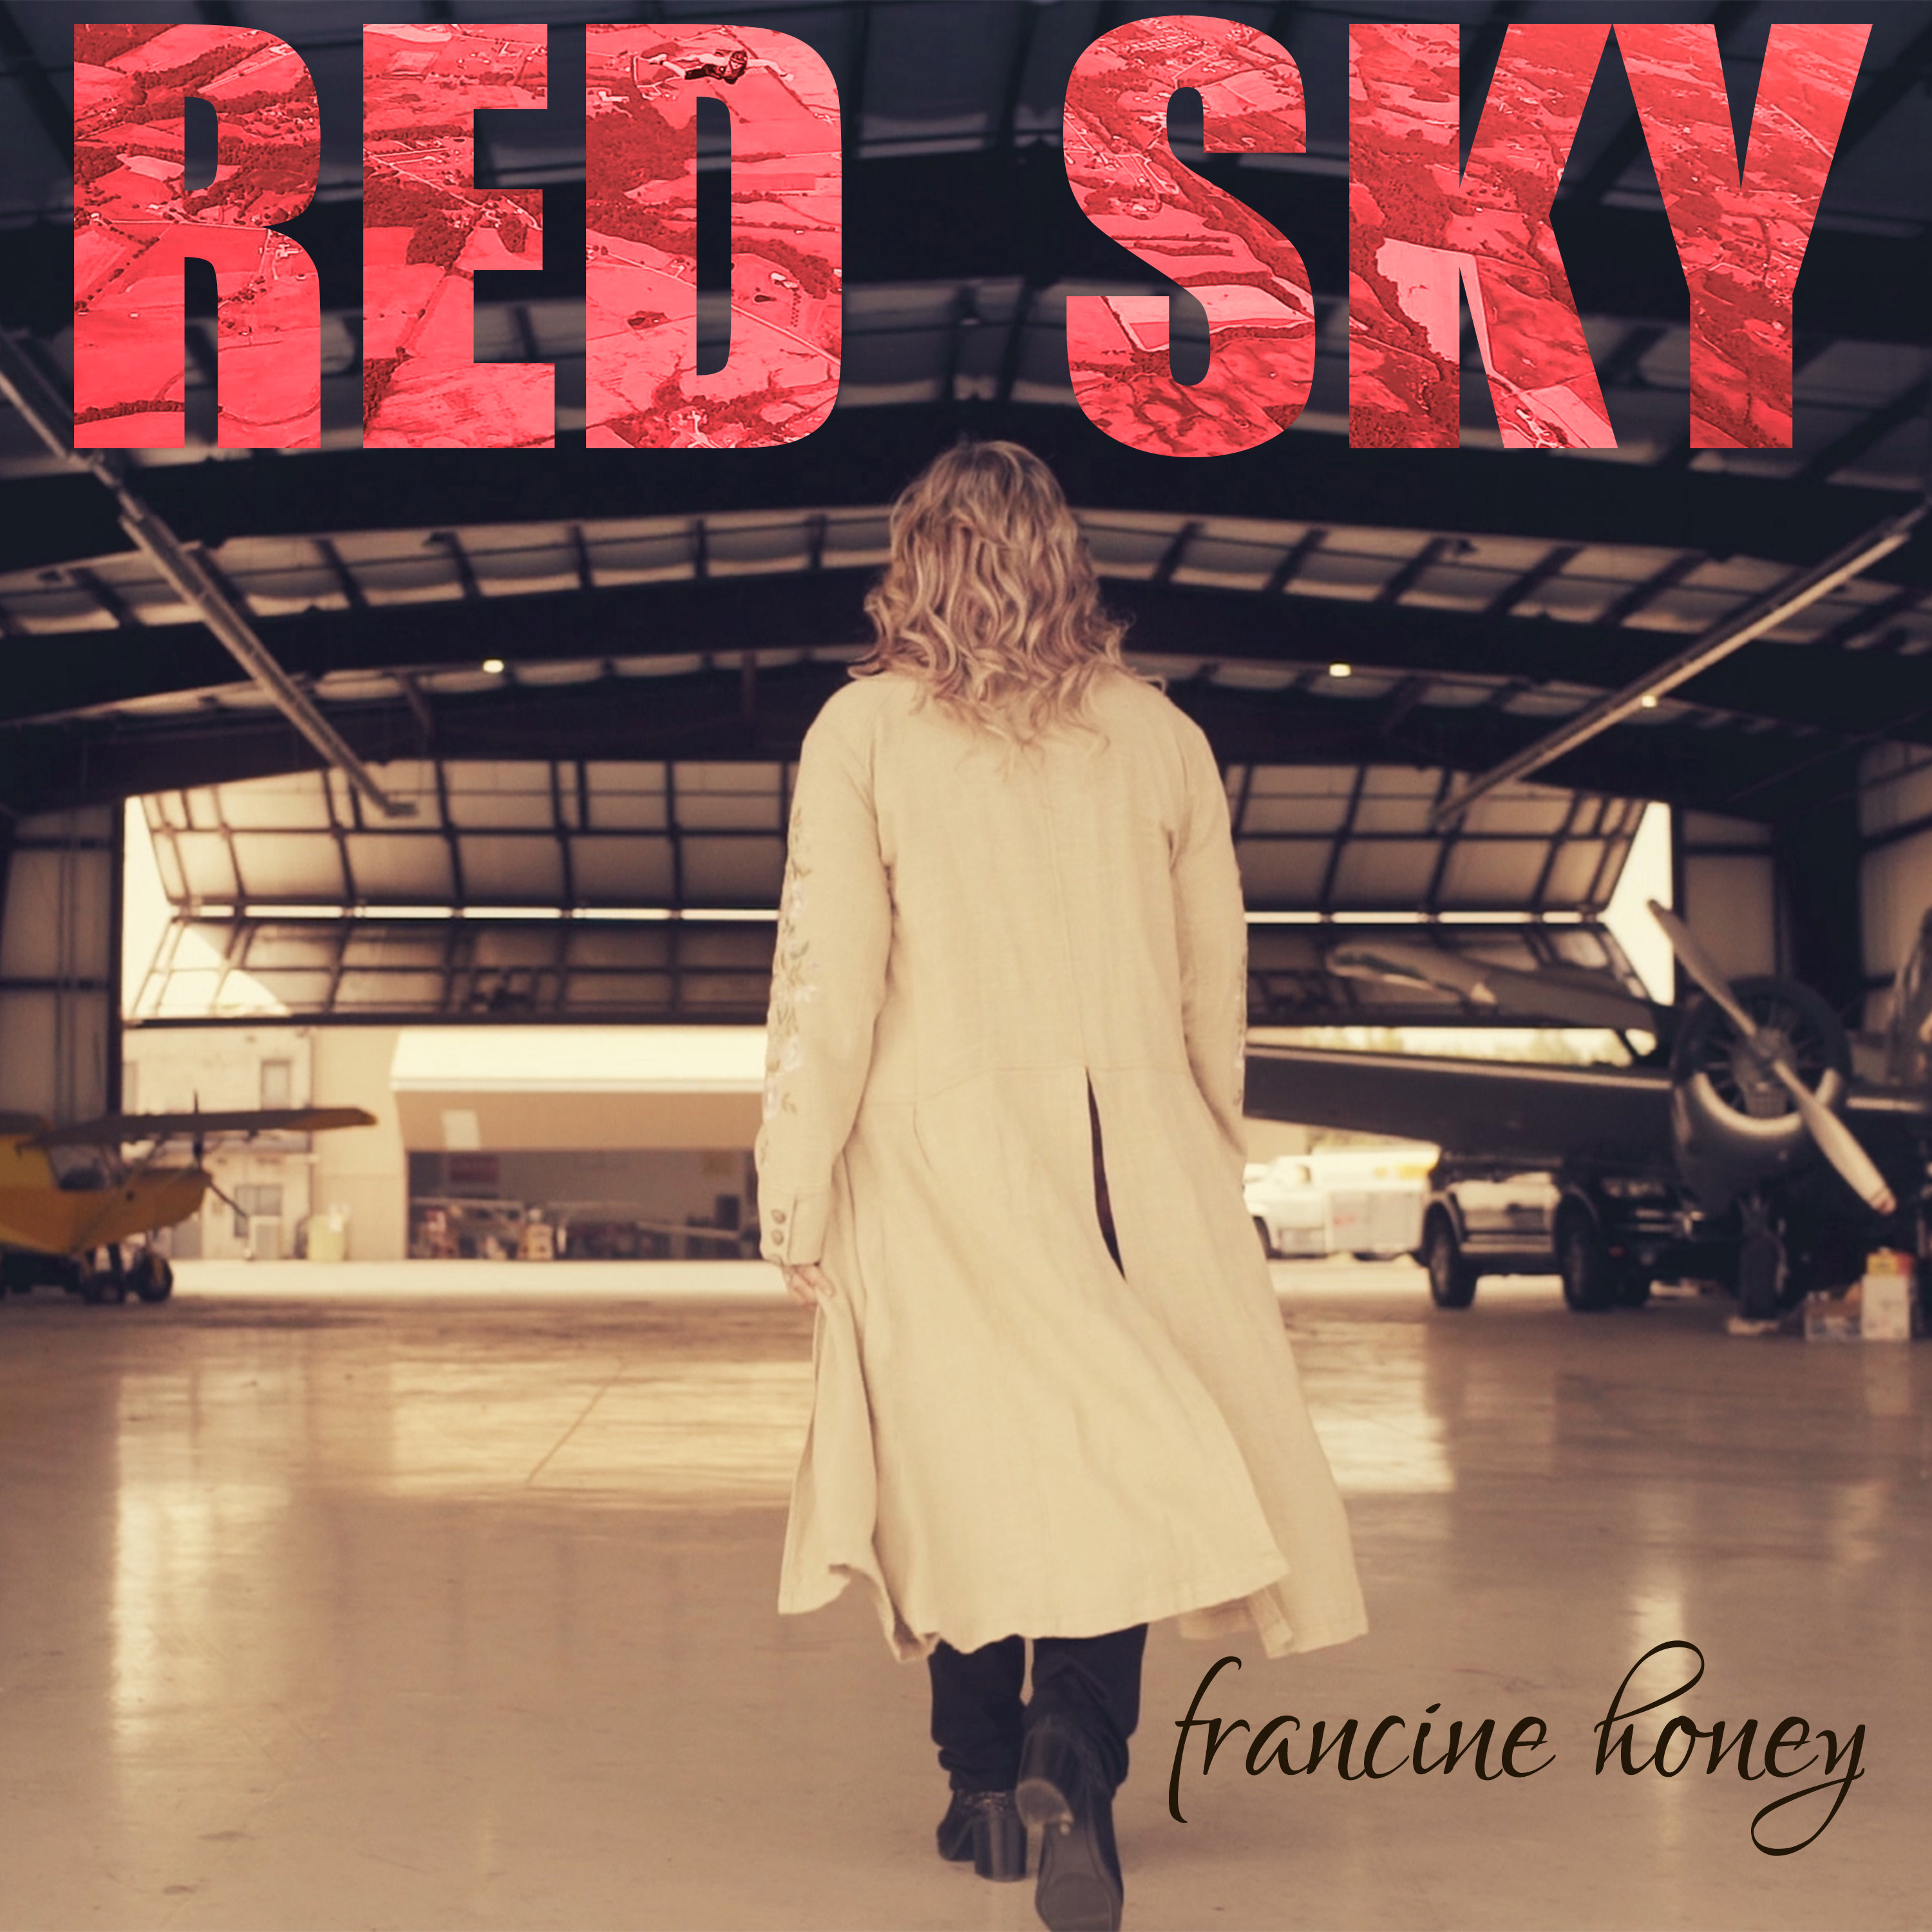 Francine Honey Releases New Single & Video ”Red Sky”